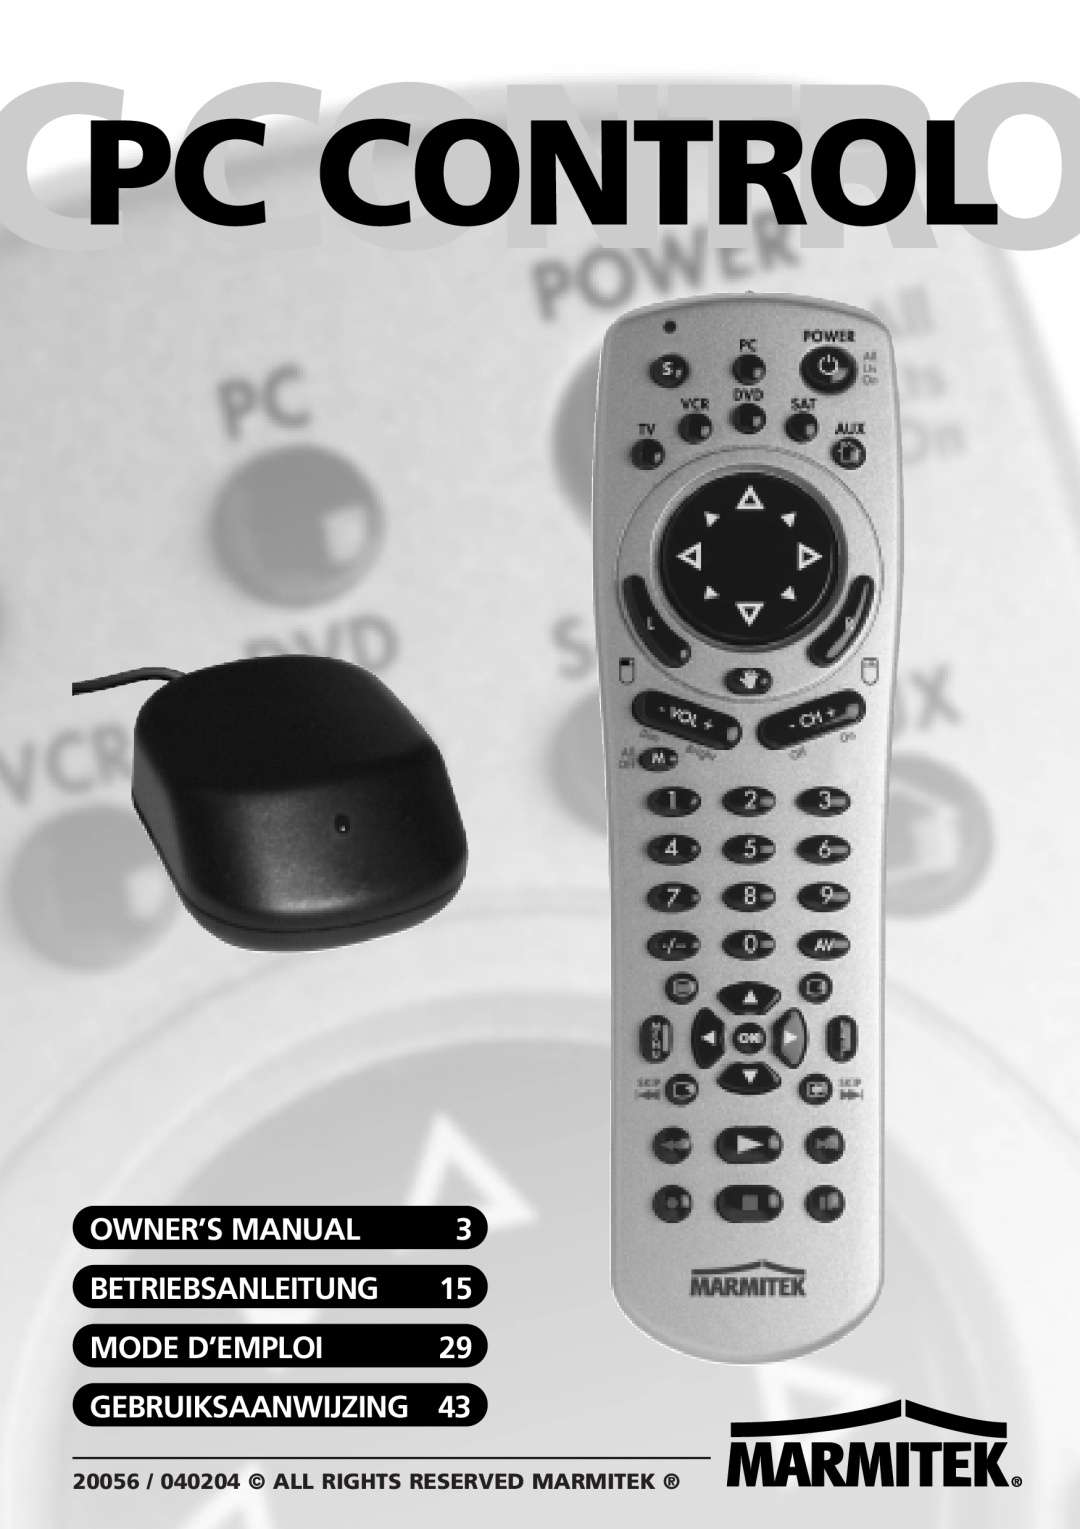 Marmitek PC CONTROL owner manual Cpccontrocontrol, Owner’S Manual, Mode D’Emploi, Betriebsanleitung, Gebruiksaanwijzing 